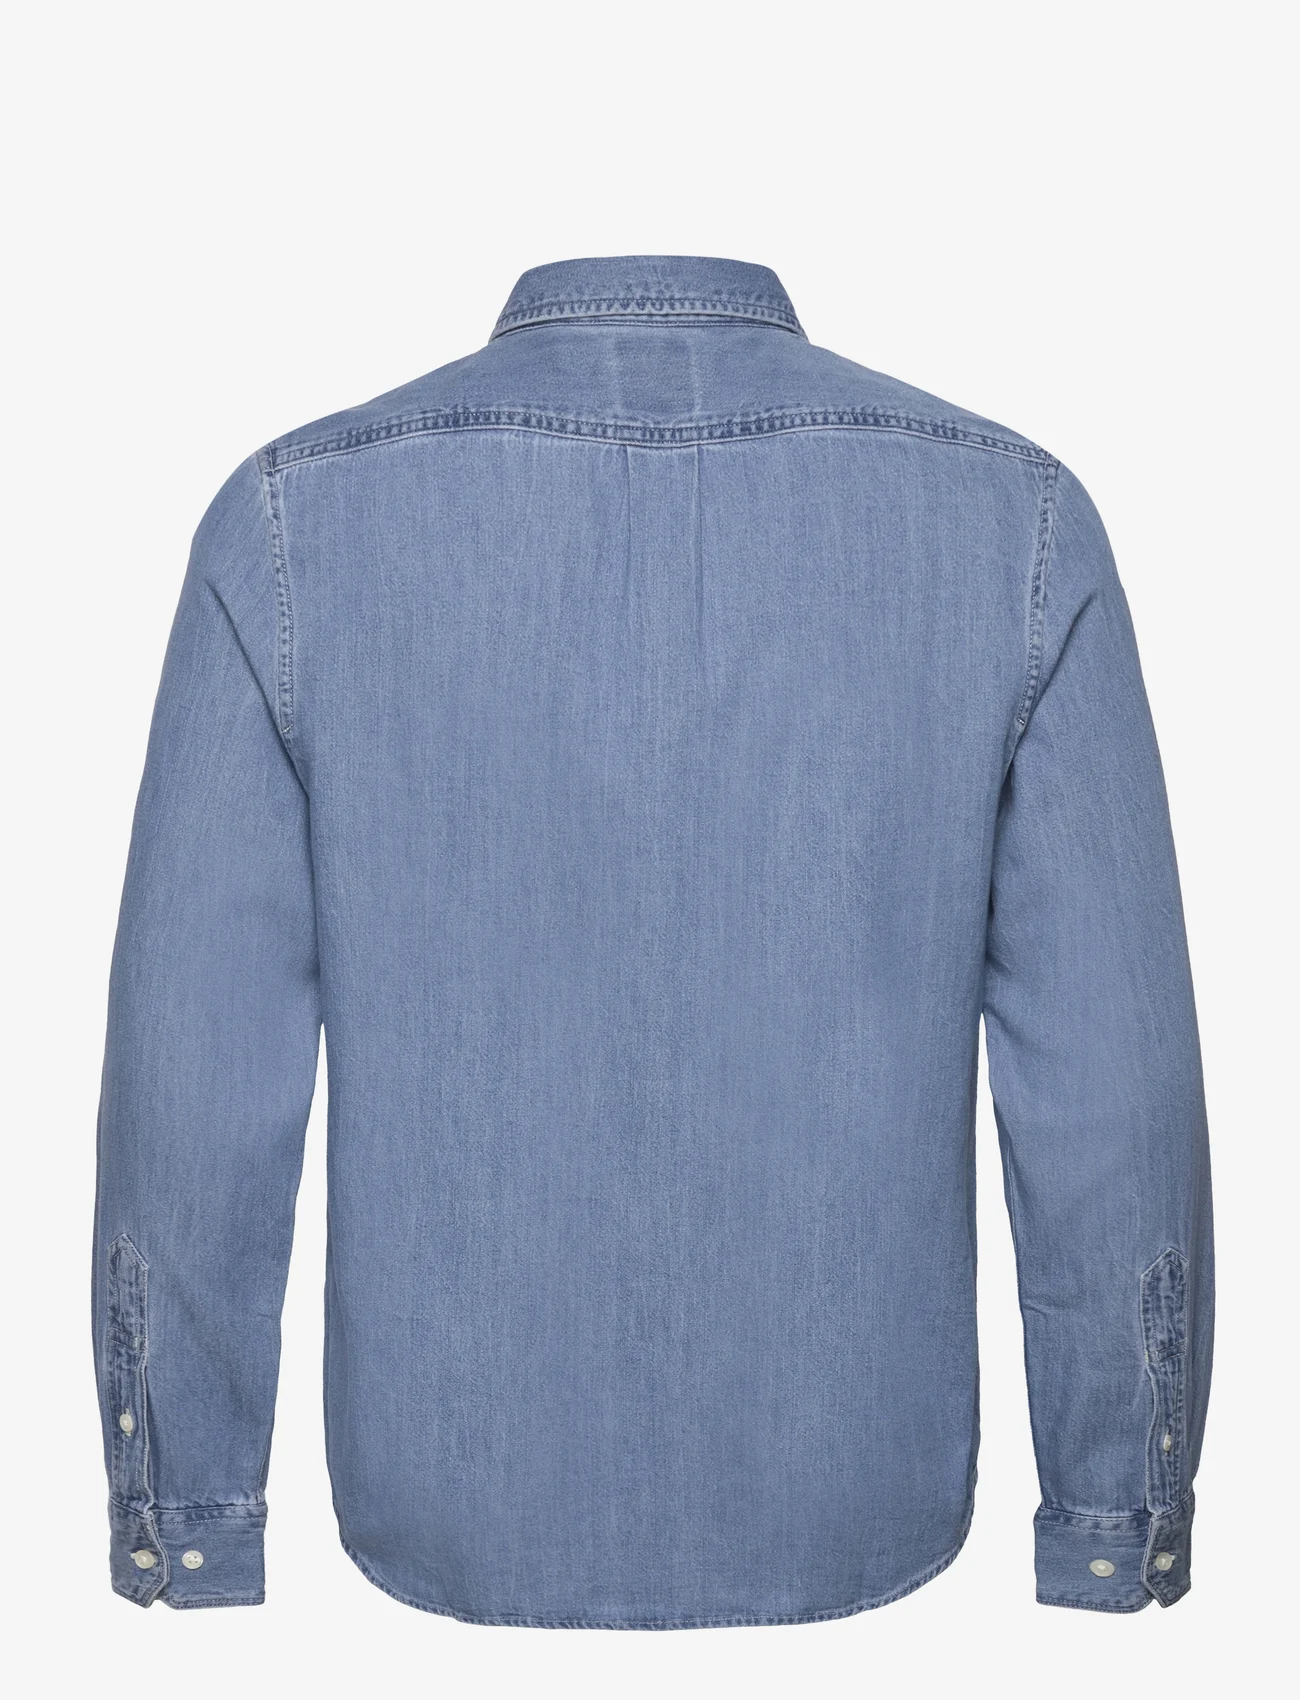 Lee Jeans - LEESURE SHIRT - checkered shirts - shasta blue - 1